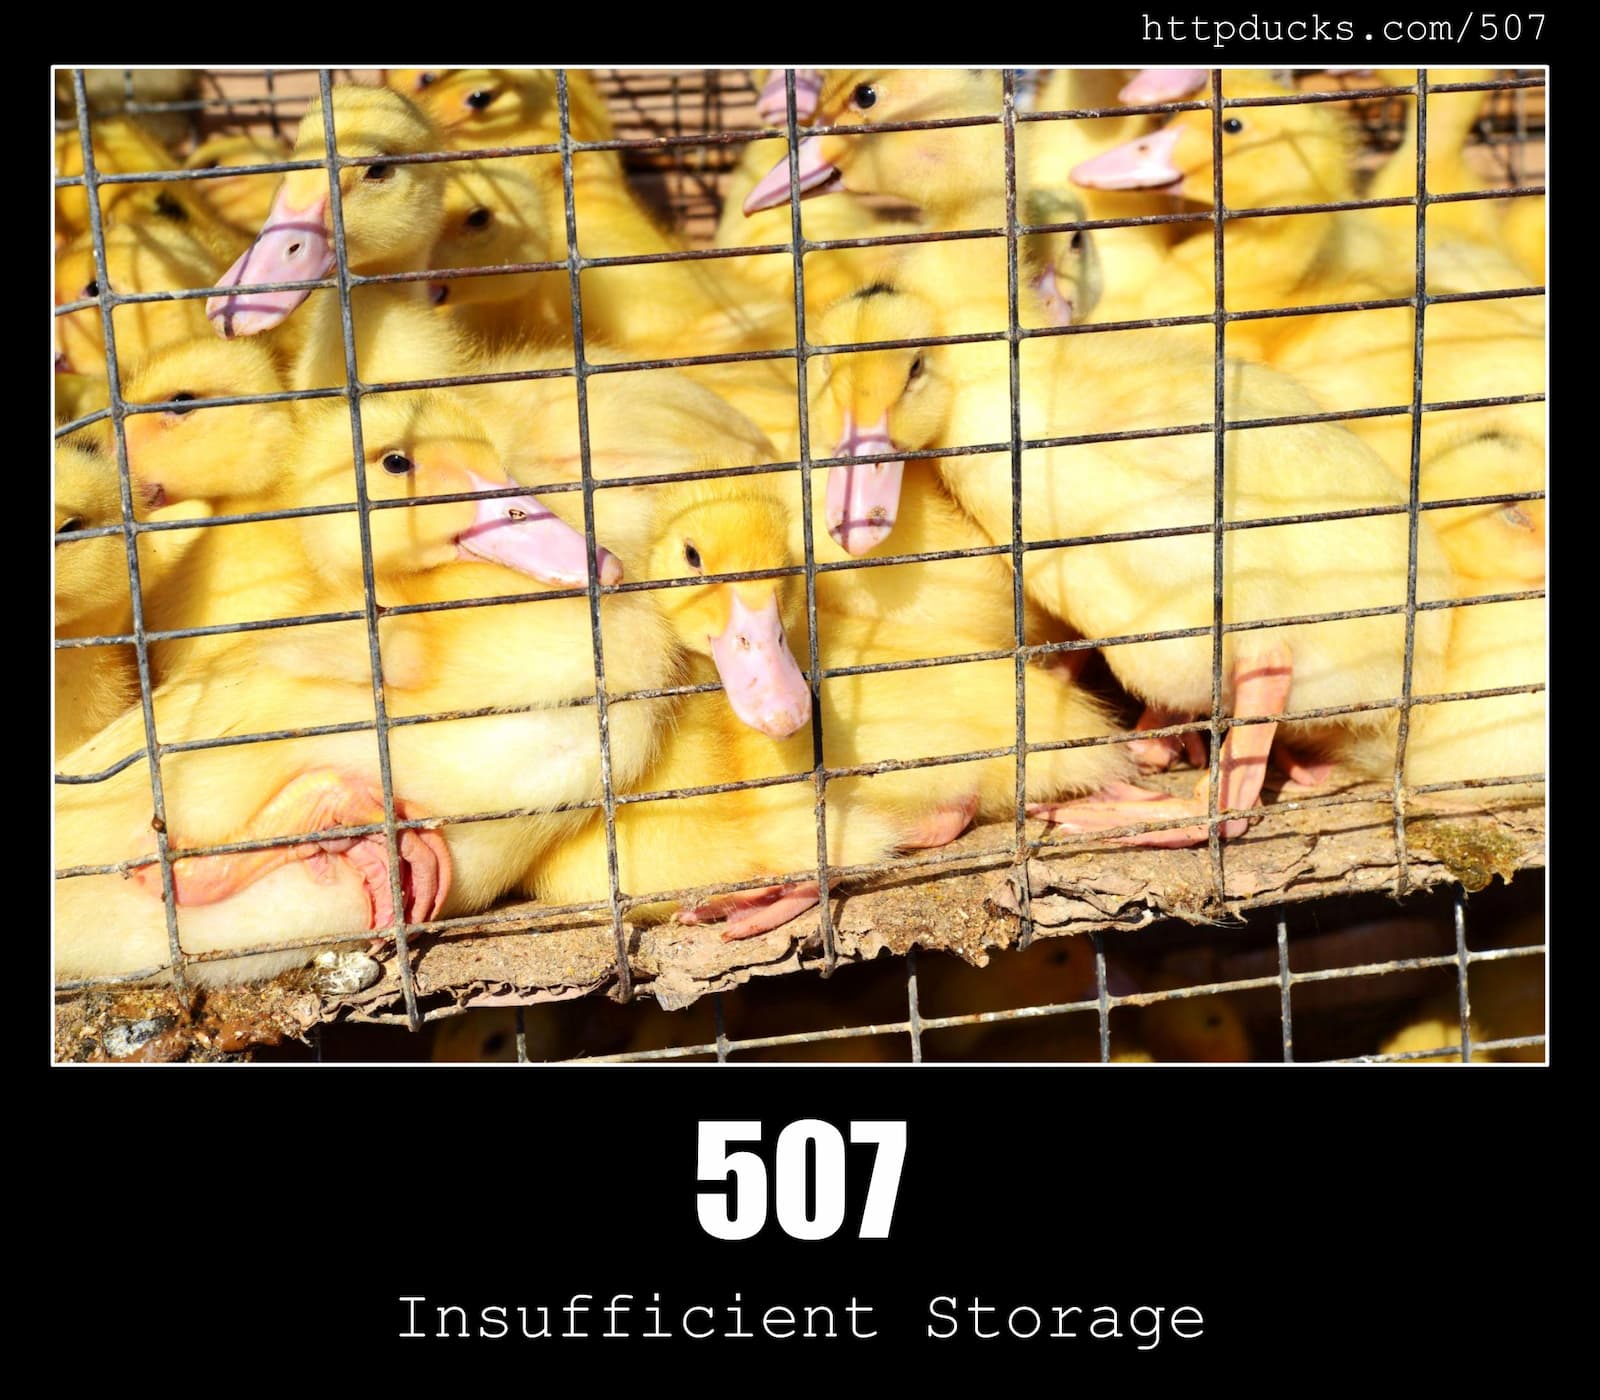 HTTP Status Code 507 Insufficient Storage & Ducks